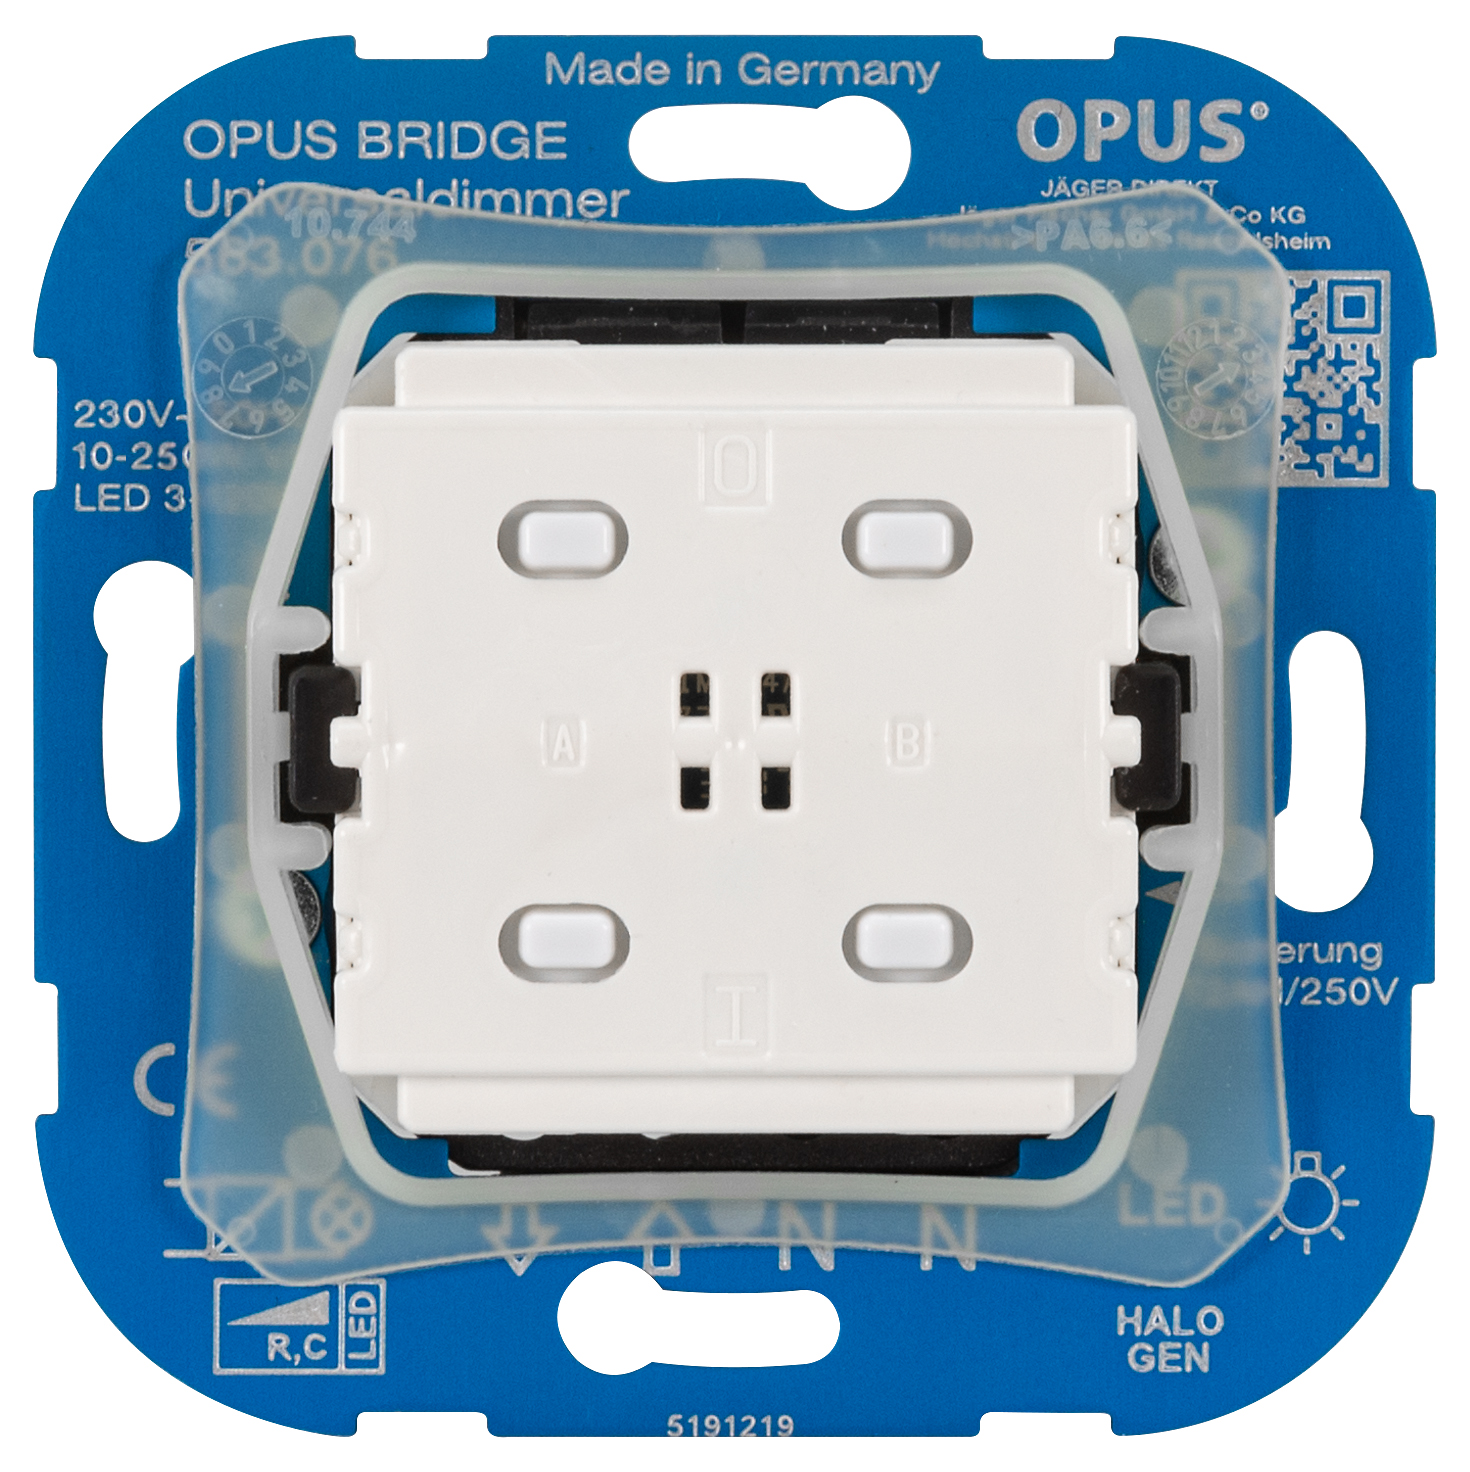 OPUS BRiDGE Universaldimmer LED 3-100W, 10-250 W/VA, 230V/50